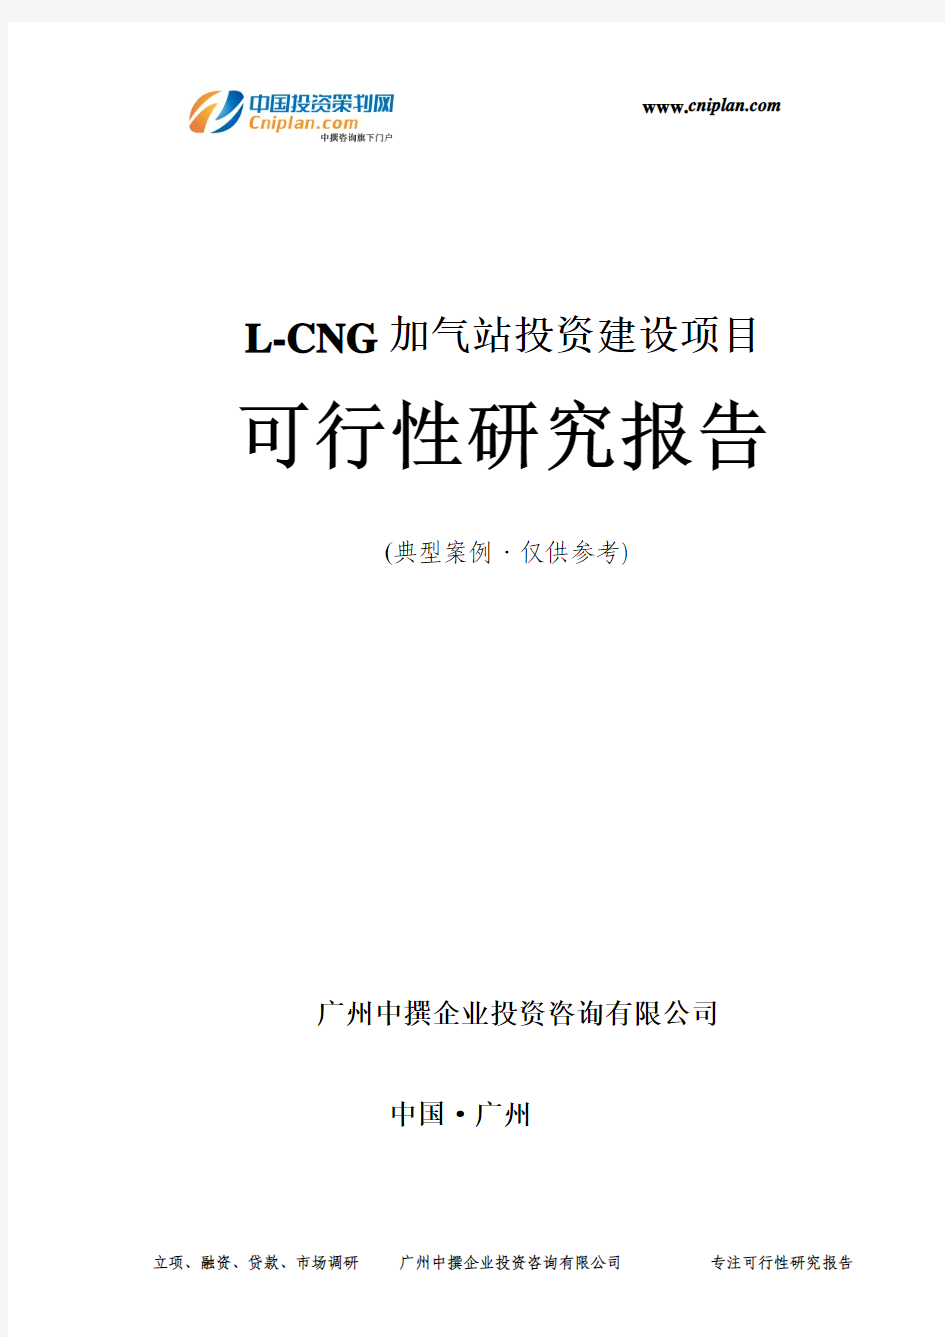 L-CNG加气站投资建设项目可行性研究报告-广州中撰咨询